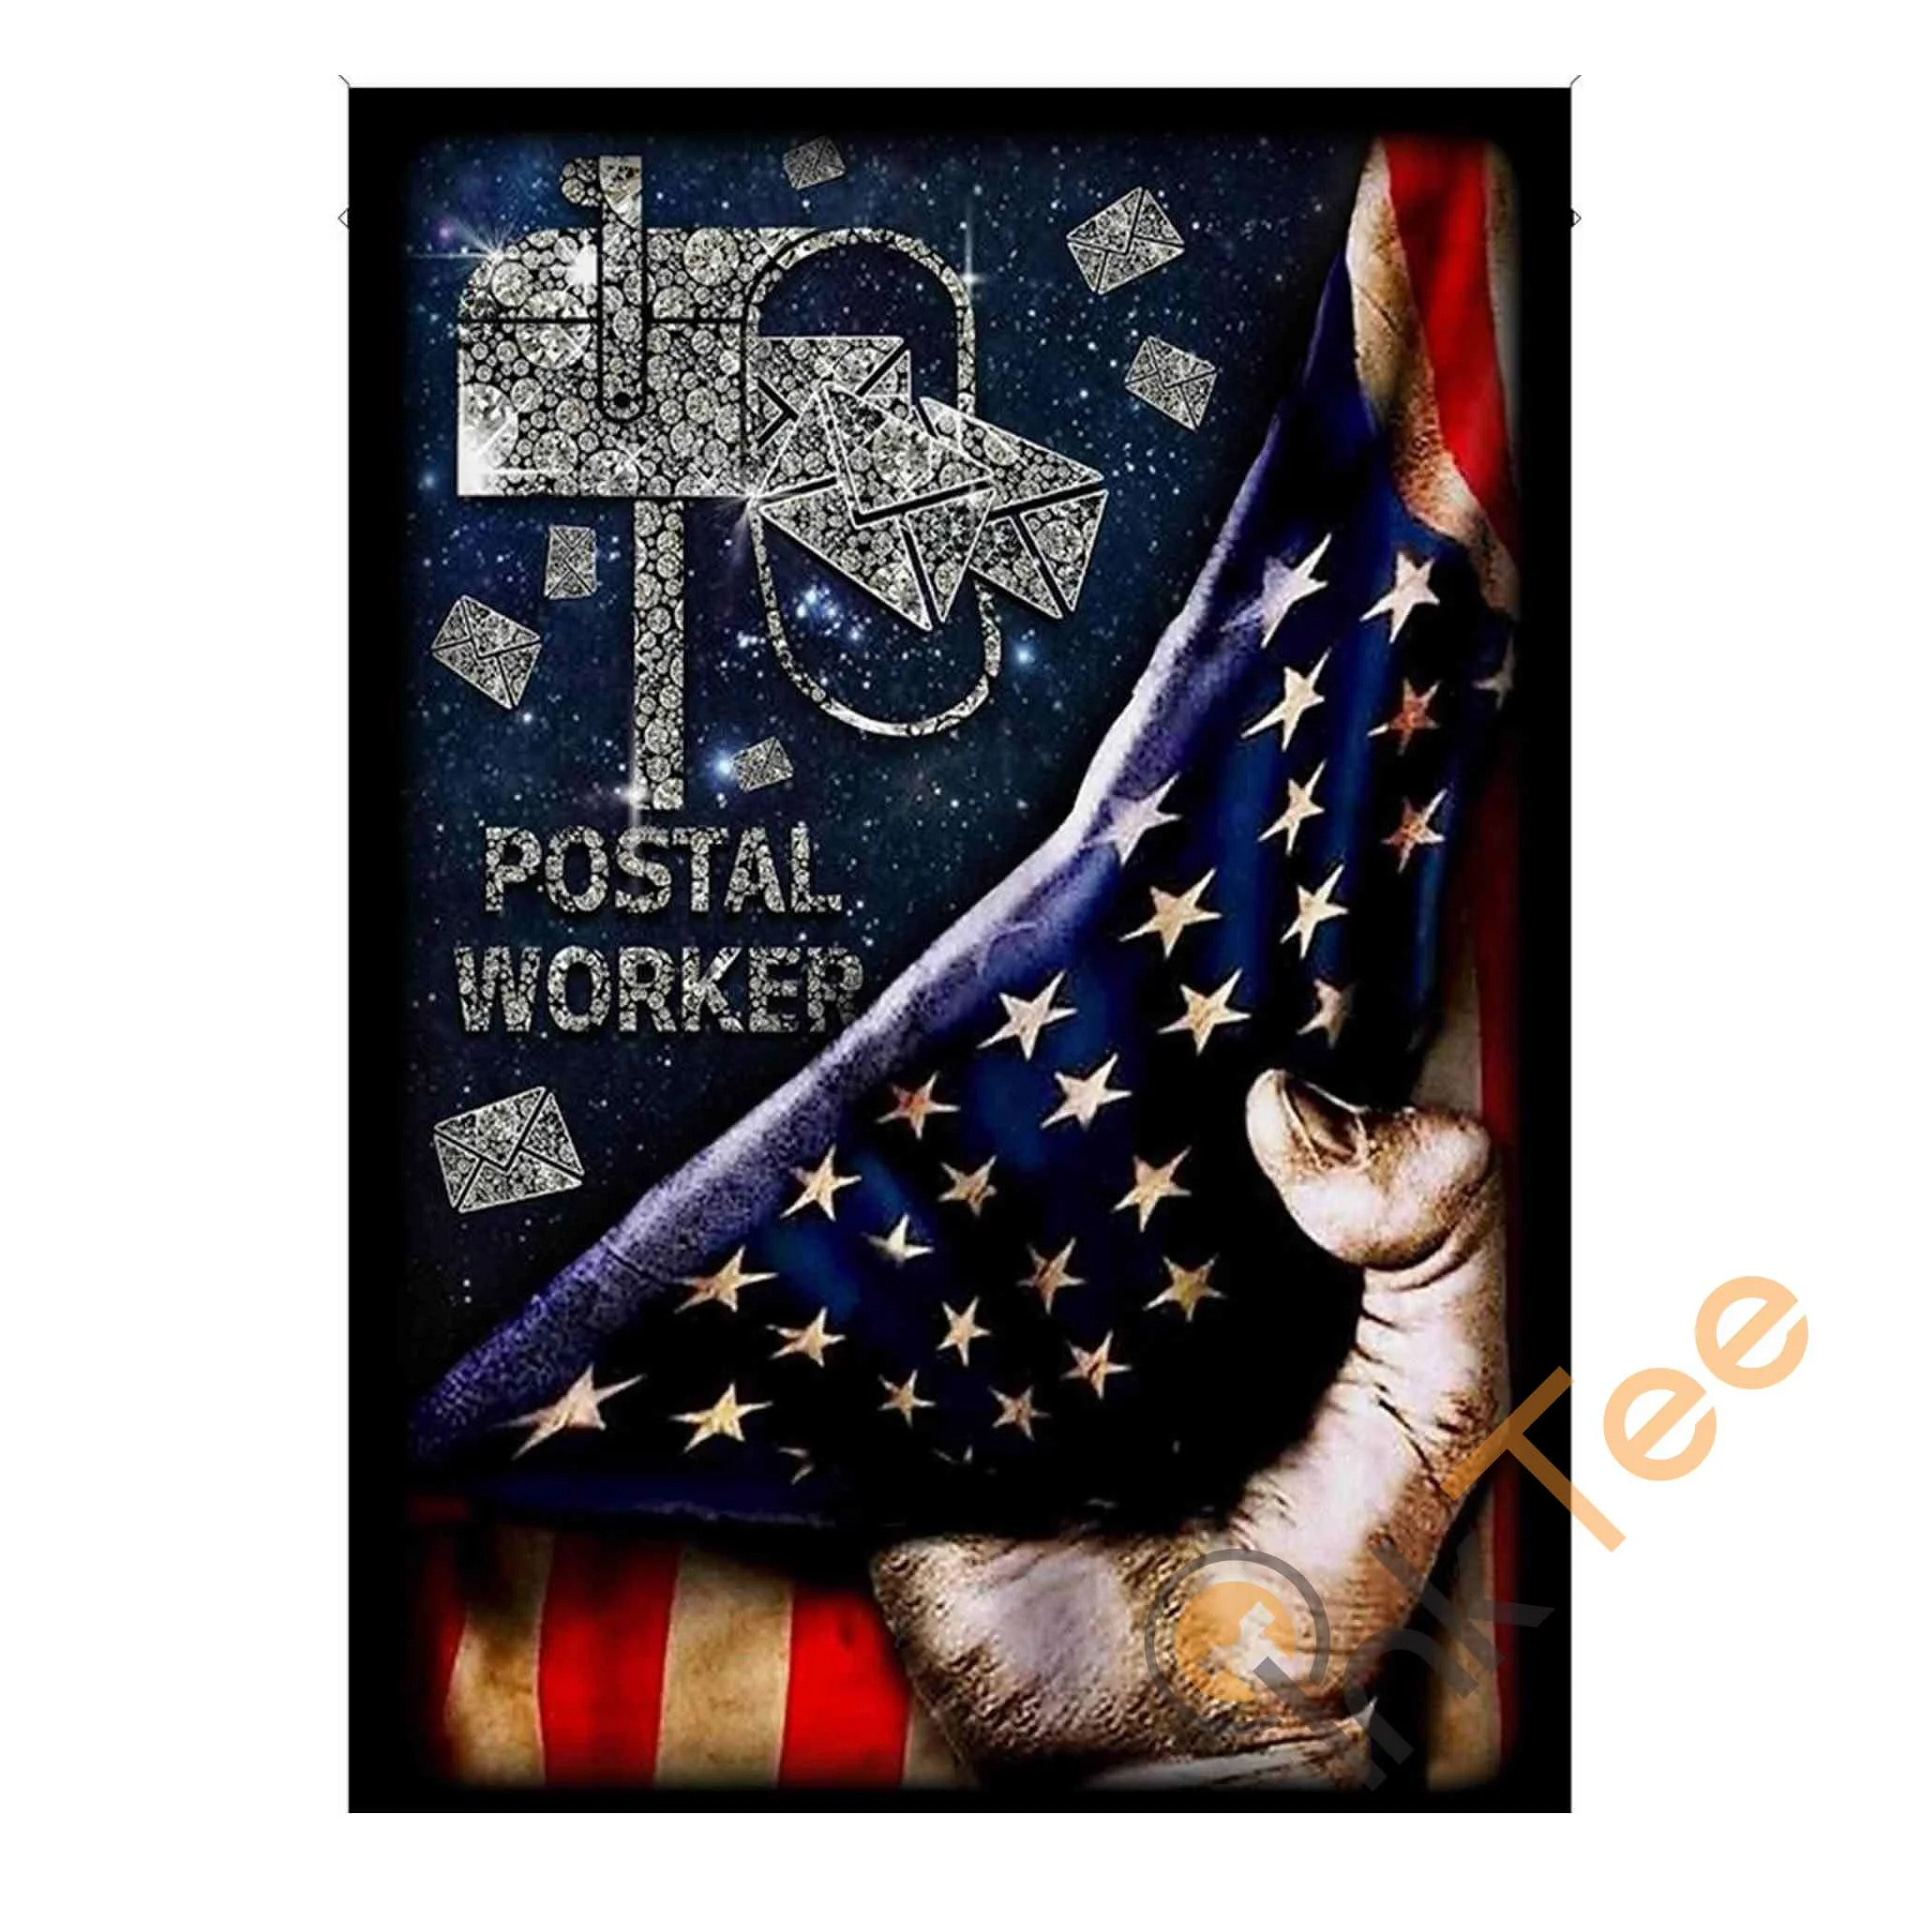 Postal Worker Diamond Mailbox Garden Flag